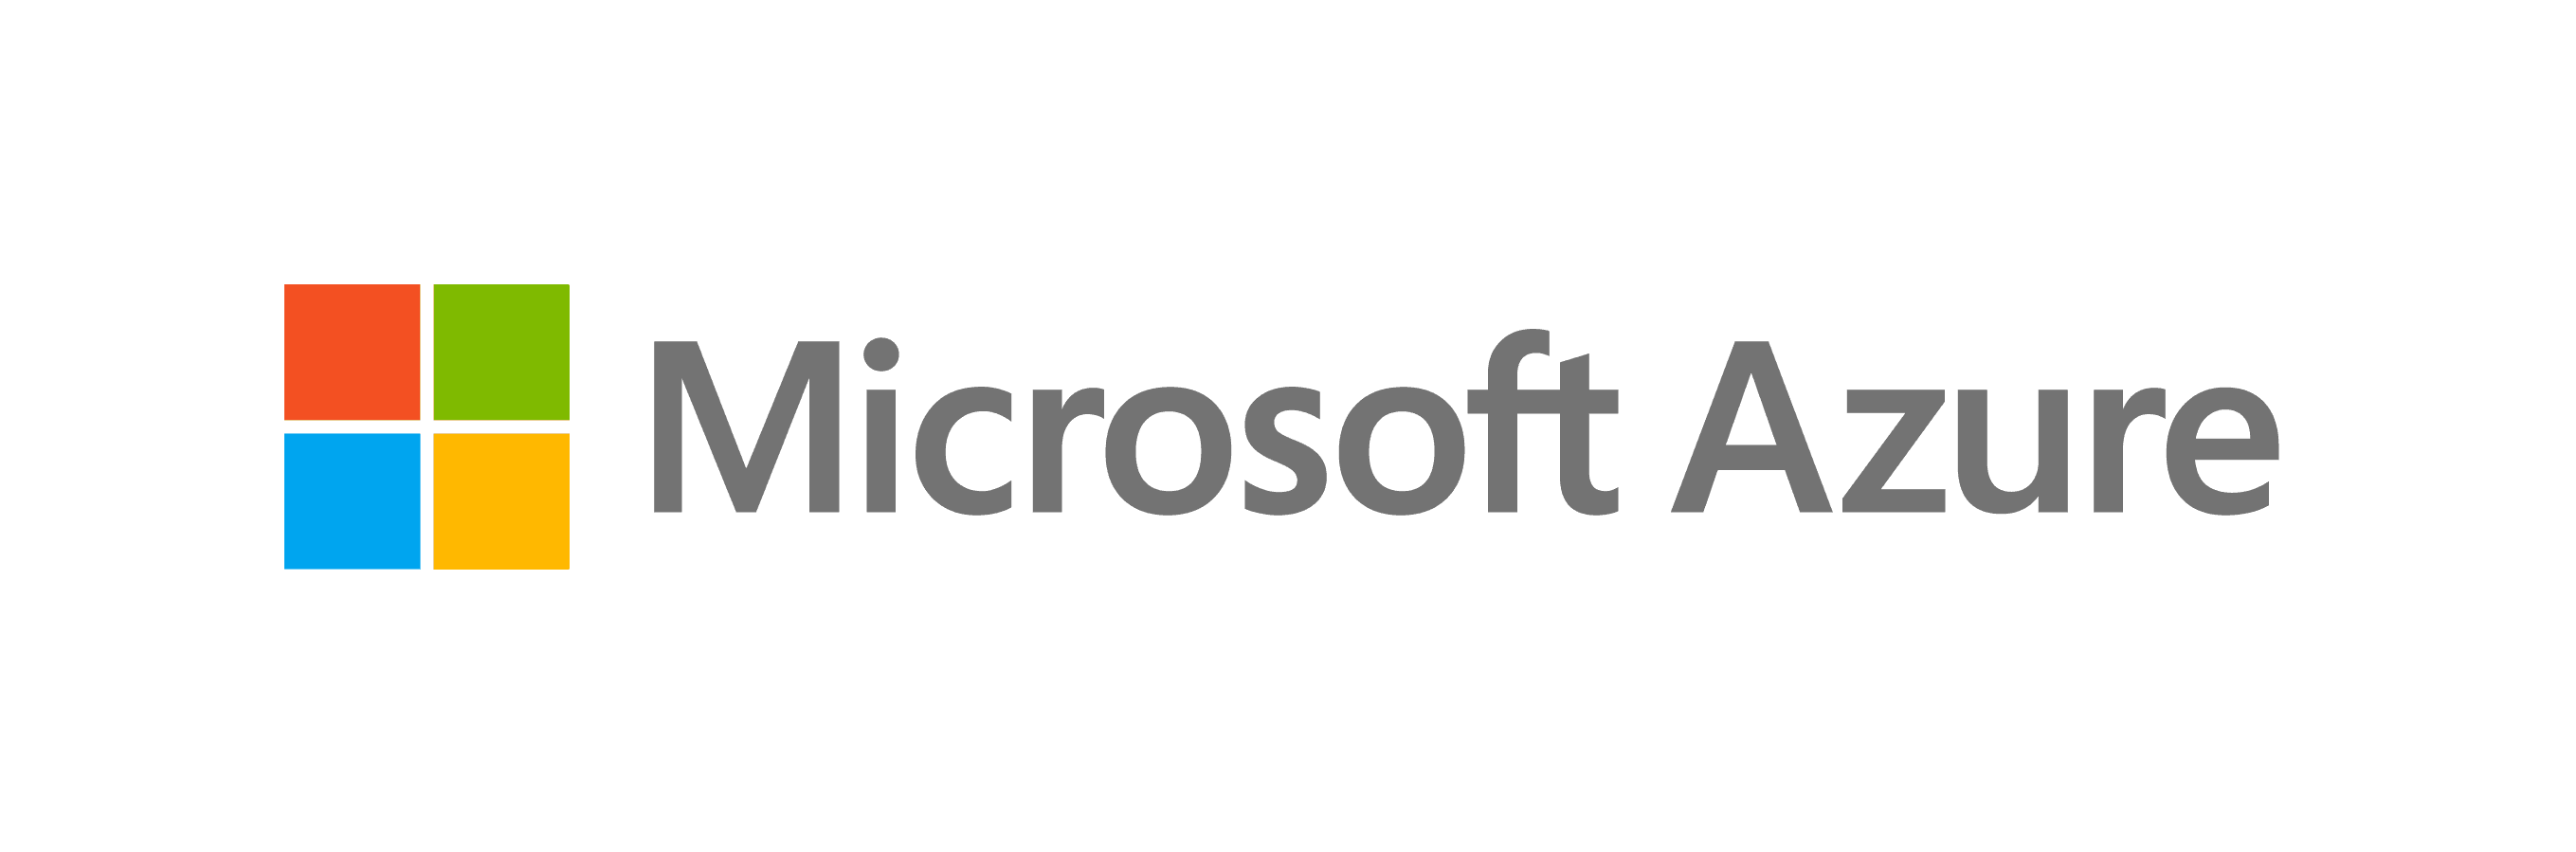 Cisco Fortinet Fujitsu NEC Fuji Xerox Fuji Film Dynamics 365 SignalFx Patlite AWS Salesforce ERP SAP Netsuite Oracle NHL NHL-3FV2W-RYG Network Monitoring Cloud Application Monitoring Microsoft Azure IoT Central LED Tower Light Warning Alarm lights Network Monitoring Intrusion Detection Surveillance Facial Recognition Mobotix